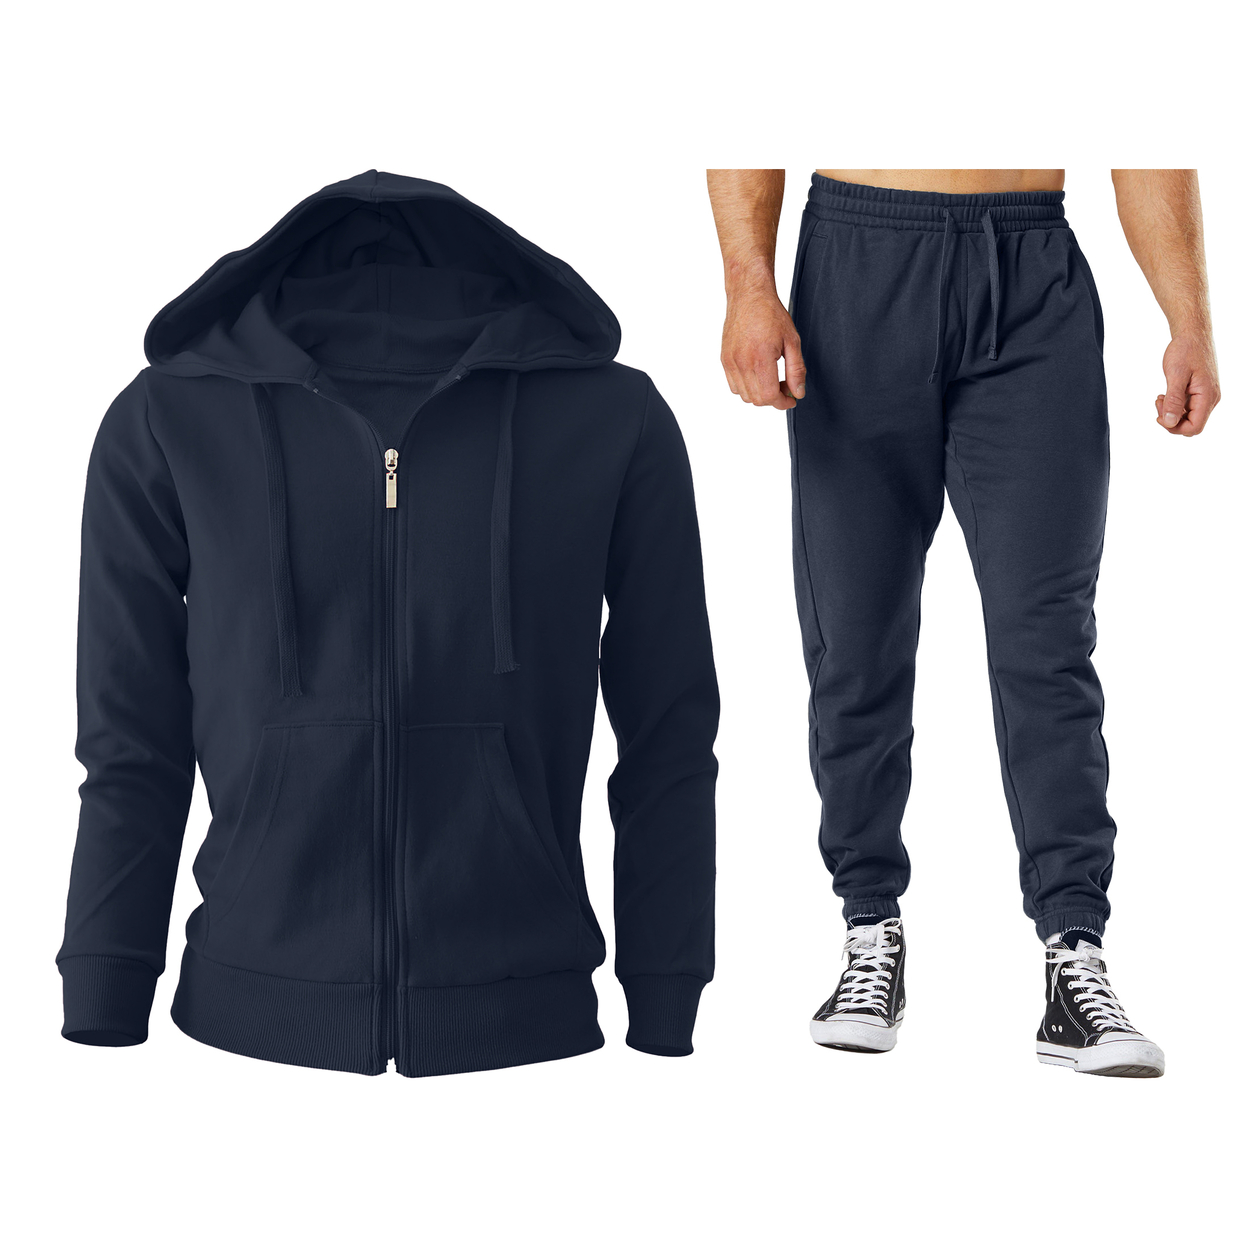 4-Piece: Men's Winter Warm Cozy Athletic Multi-Pockets BIG & TALL Sweatsuit Set - Navy, 3xl